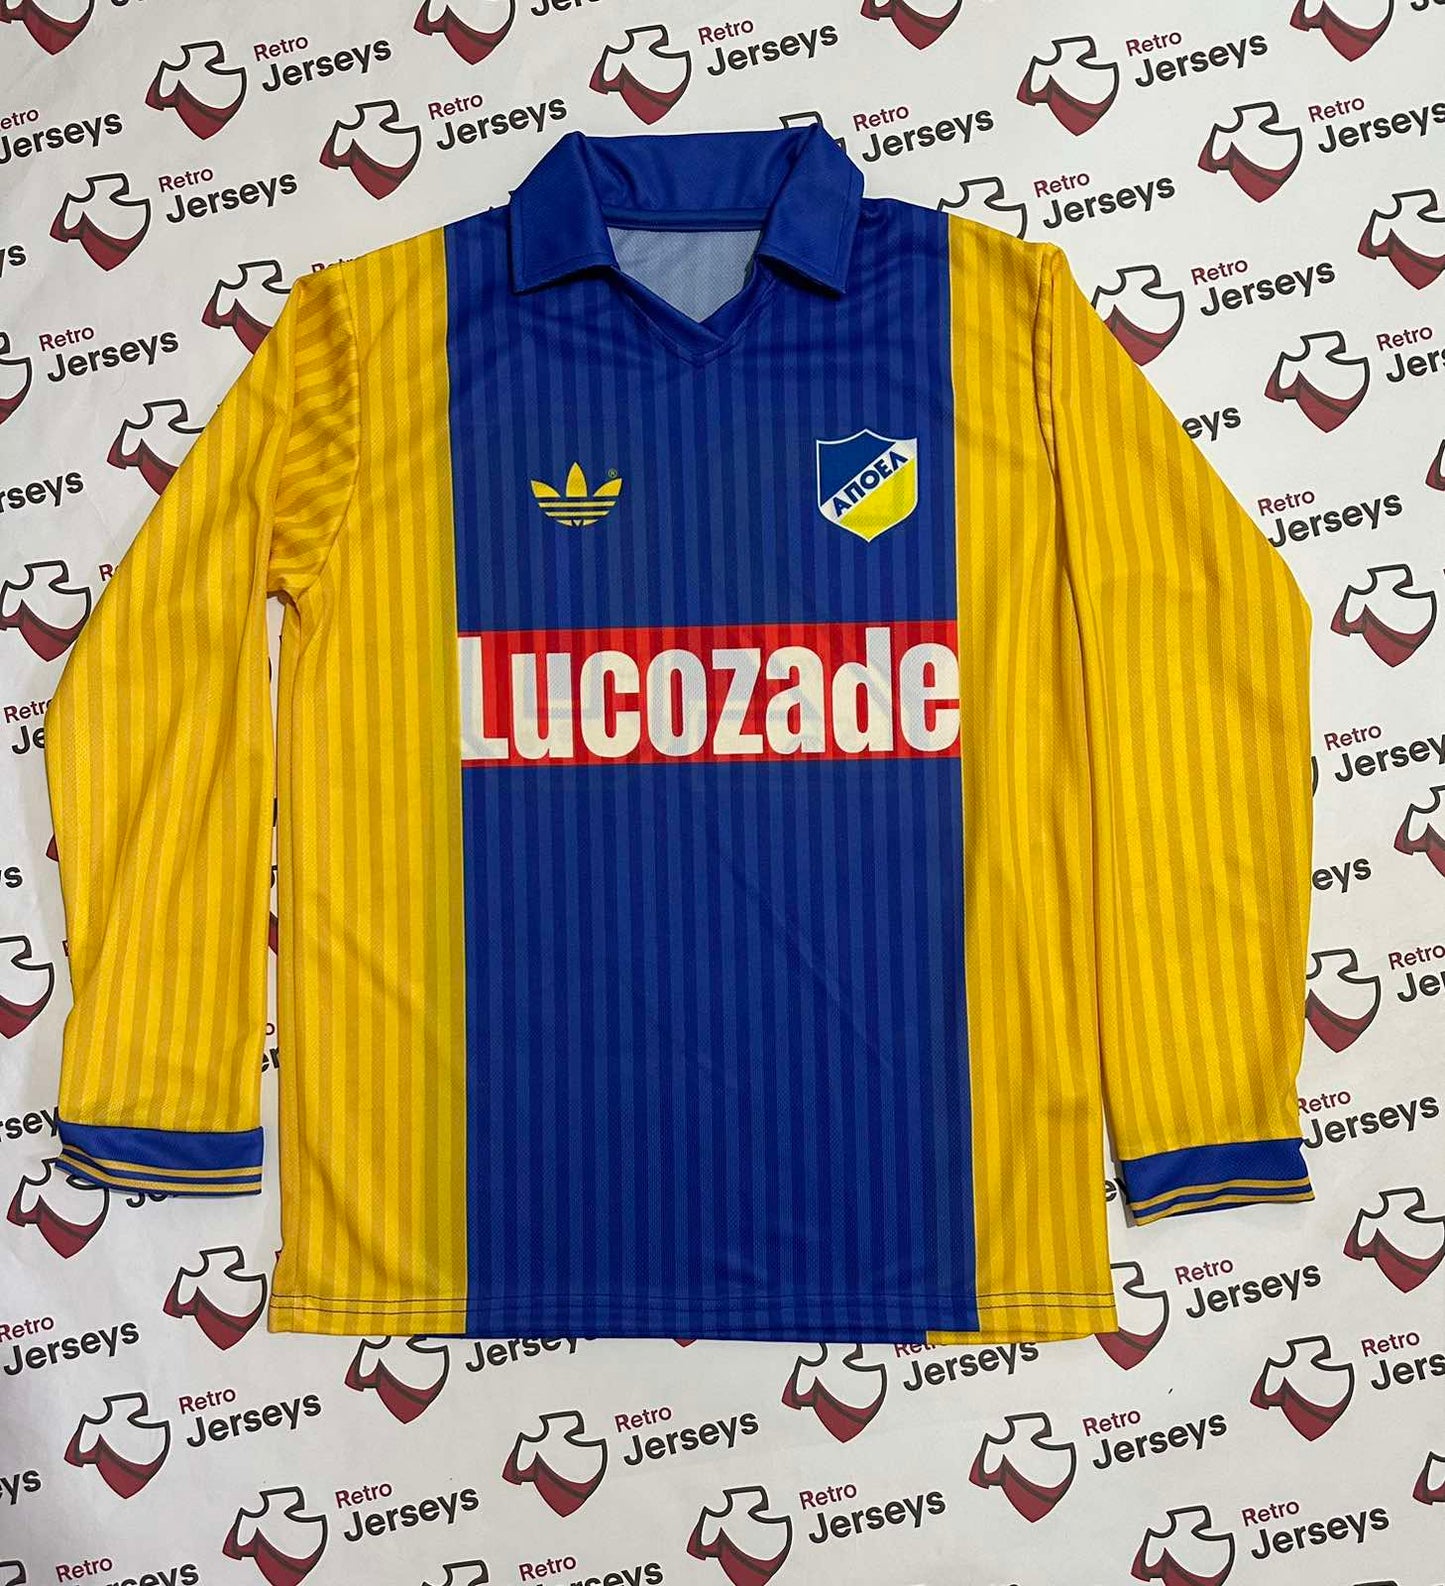 APOEL Nicosia Shirt 1989-1990 Away - Retro Jersey, φανέλα αποέλ